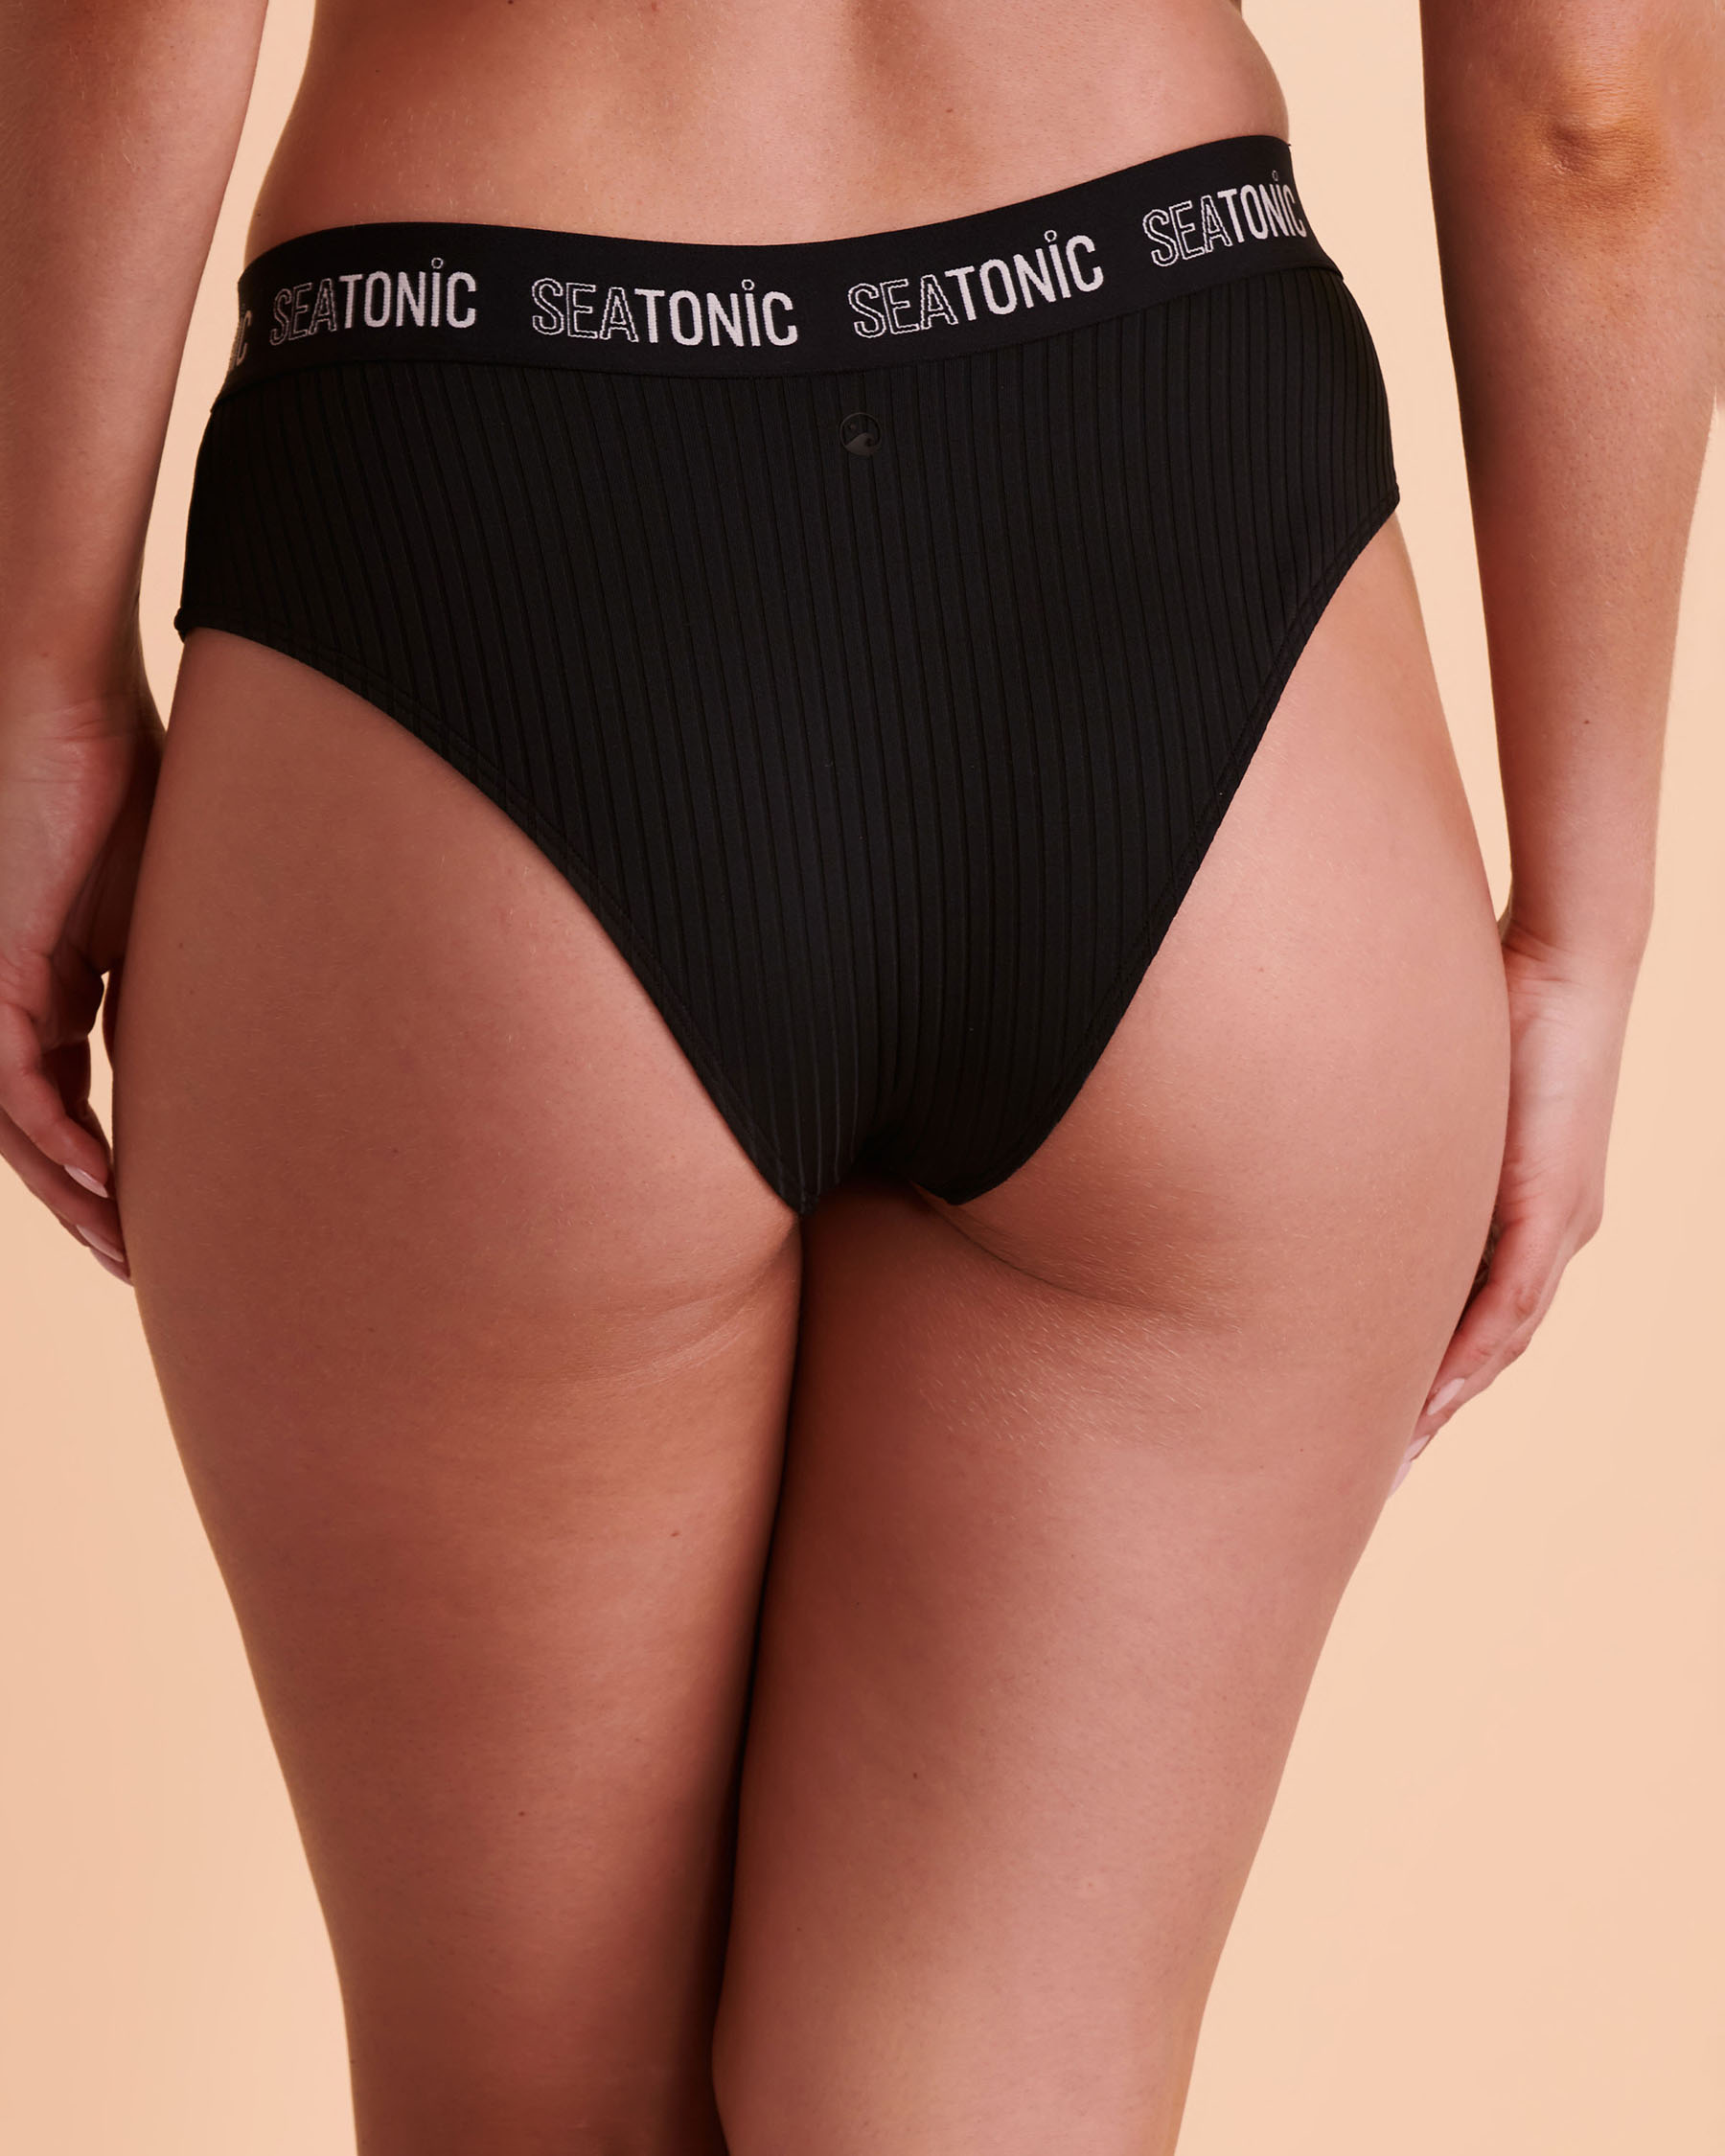 SEATONIC ELASTIC Thong Bikini Bottom Black 01300120 - View2